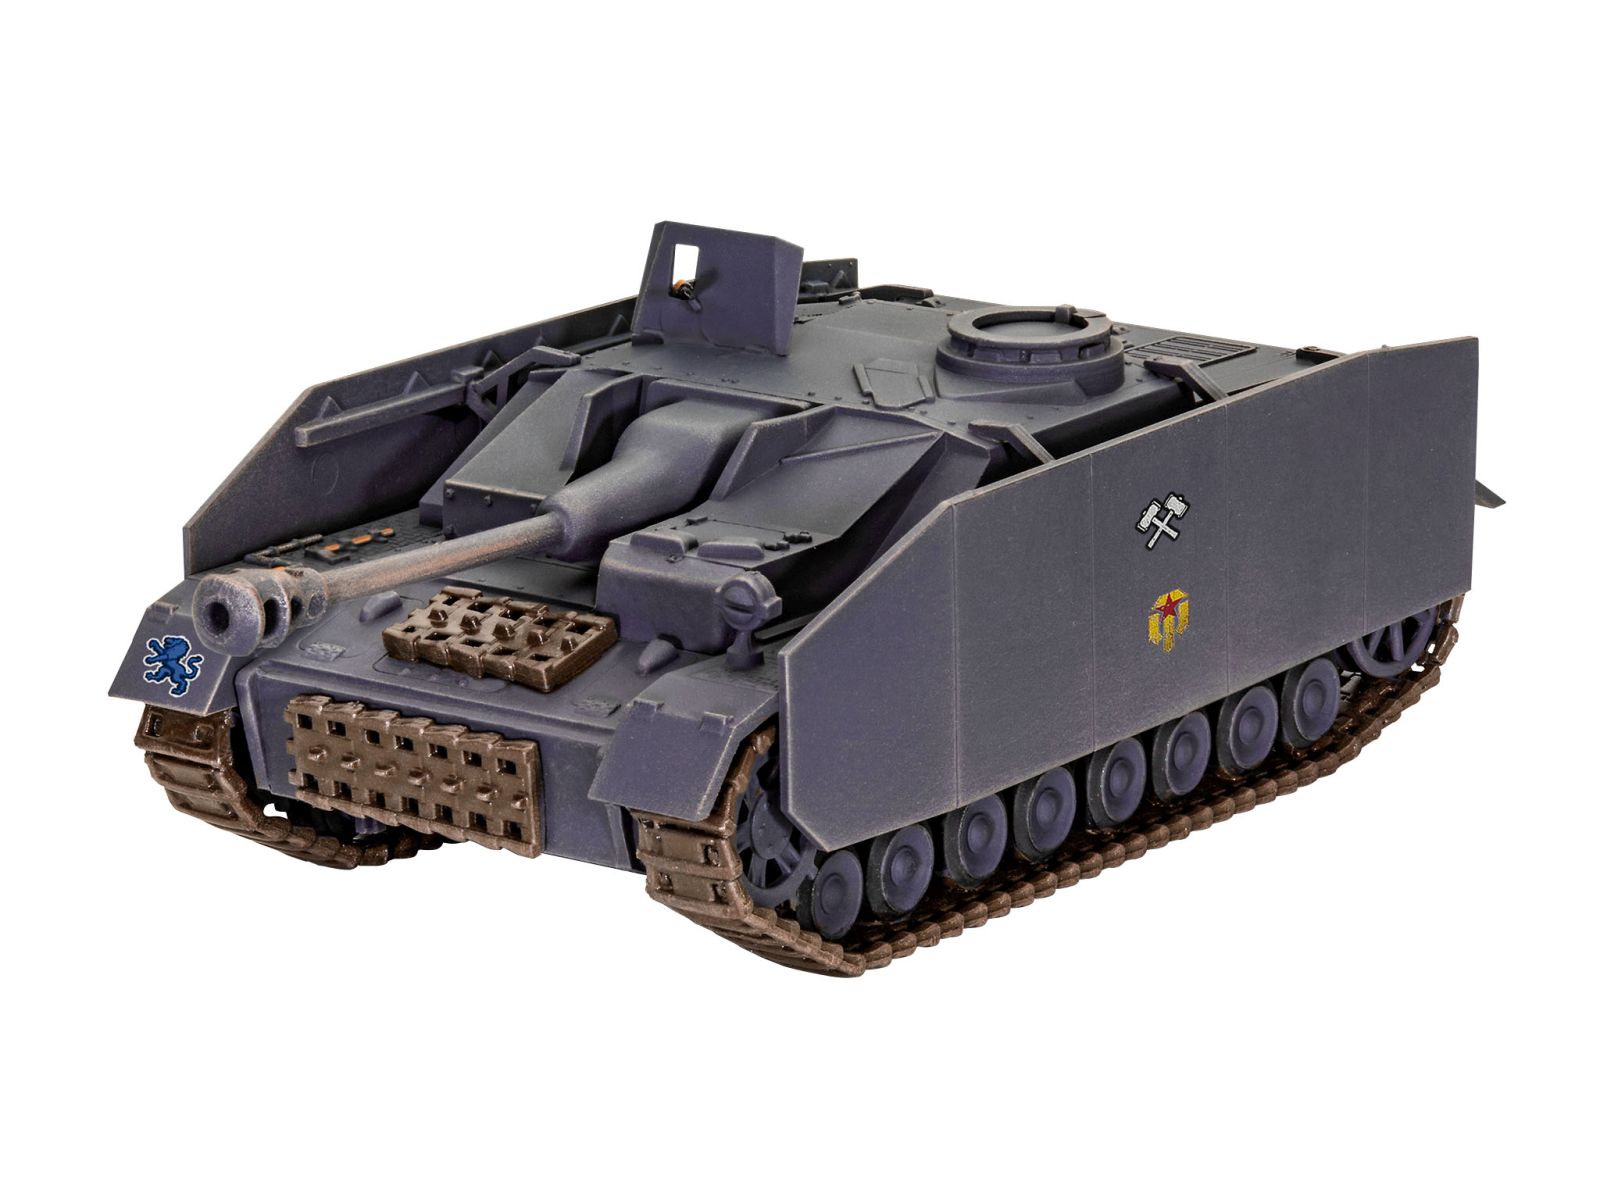 Revell 03502 - Sturmgeschütz IV "World of Tanks"